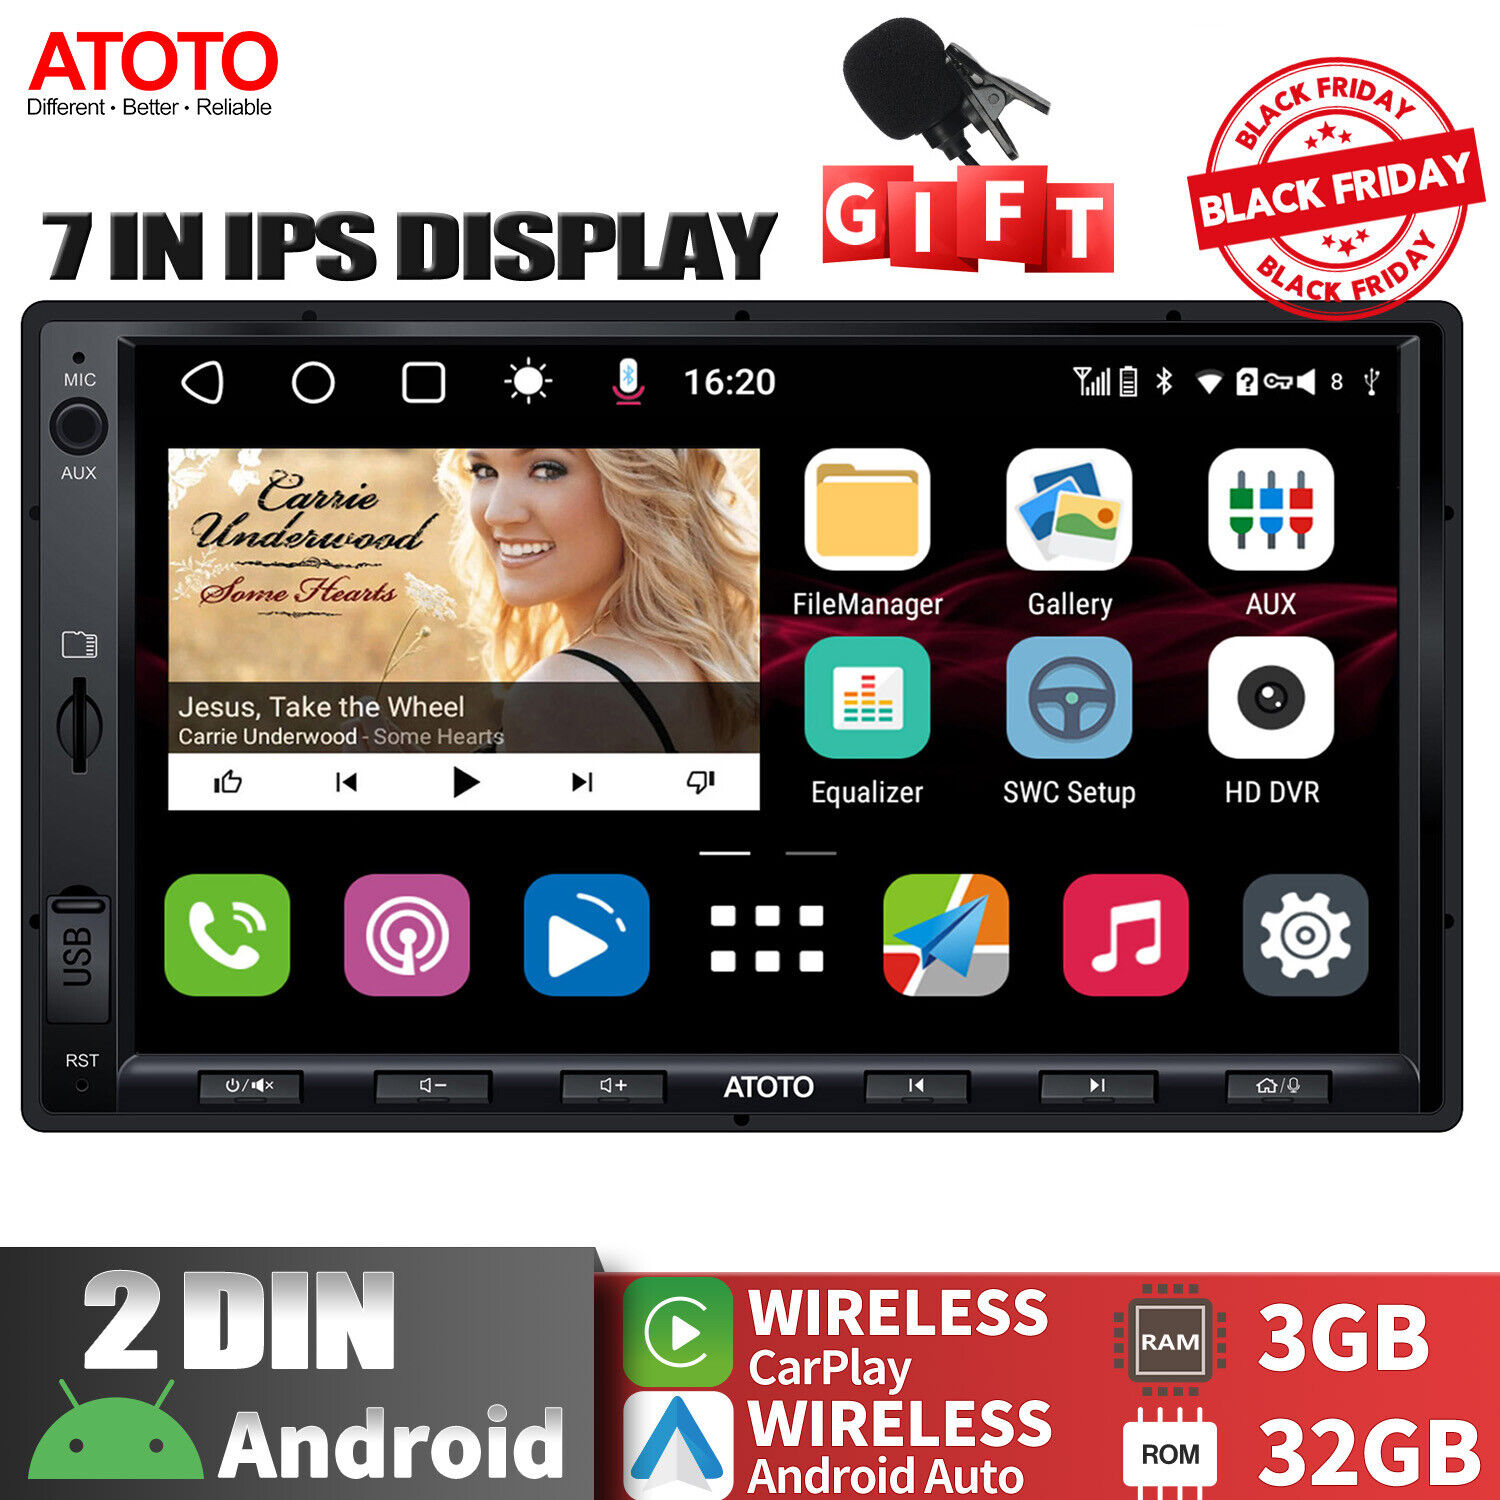 ATOTO S8 7IN Car Stereo 2DIN GPS Track NAVI Radios Wireless Android Auto CarPlay